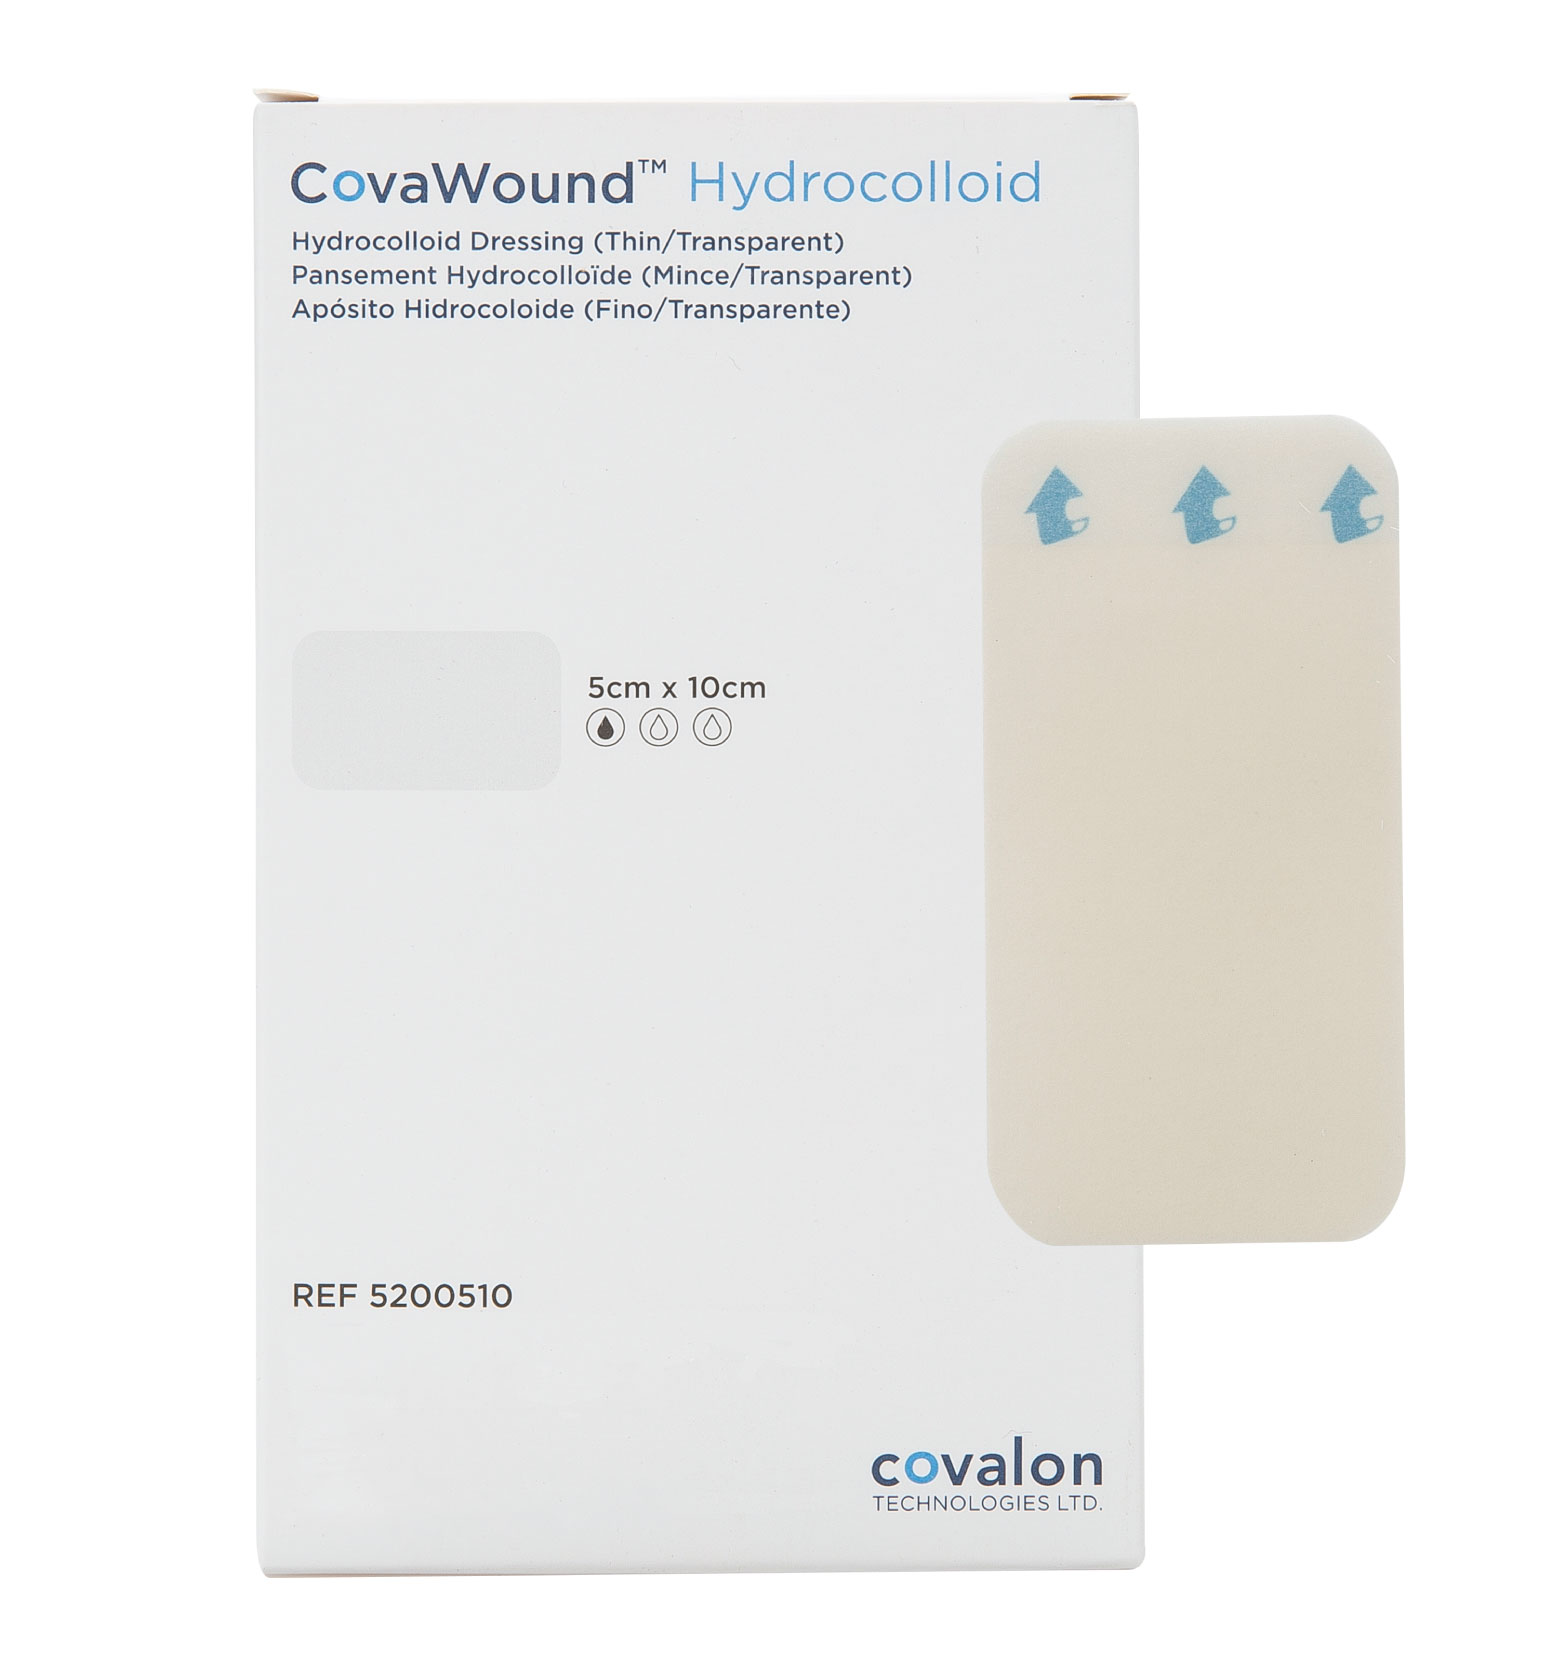 CovaWound Hydrocolloid Thin